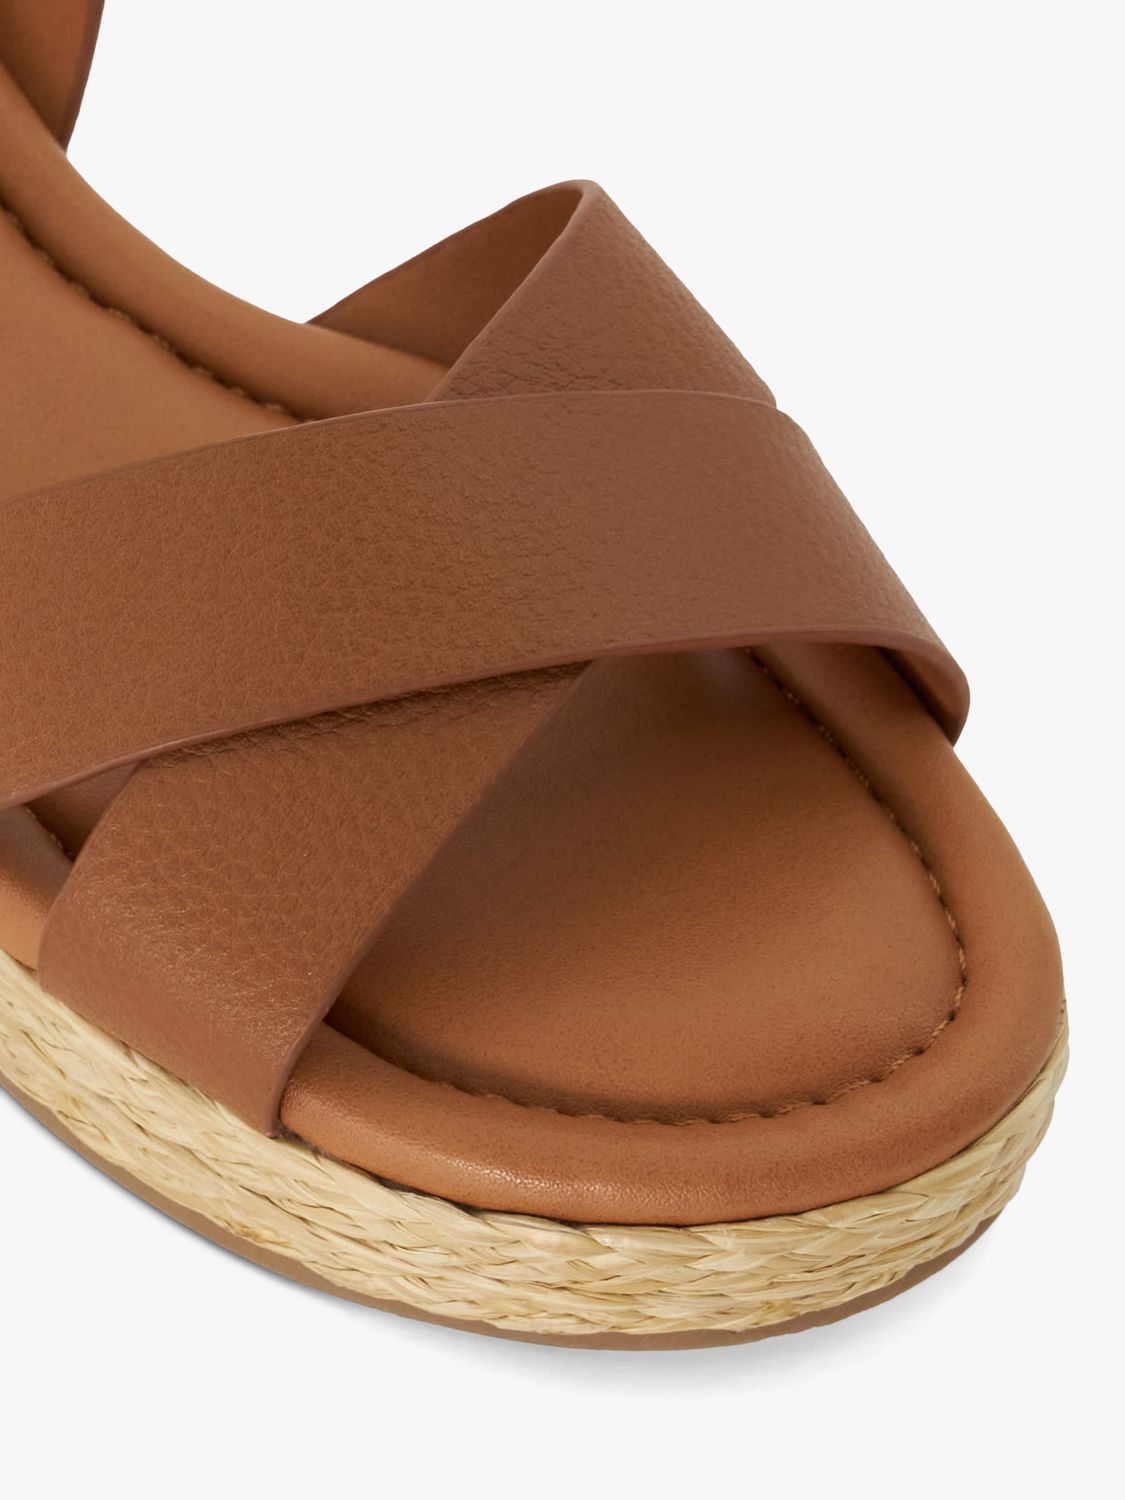 Buy Dune Linnie Leather Cross Strap Sandals, Dark Tan Online at johnlewis.com